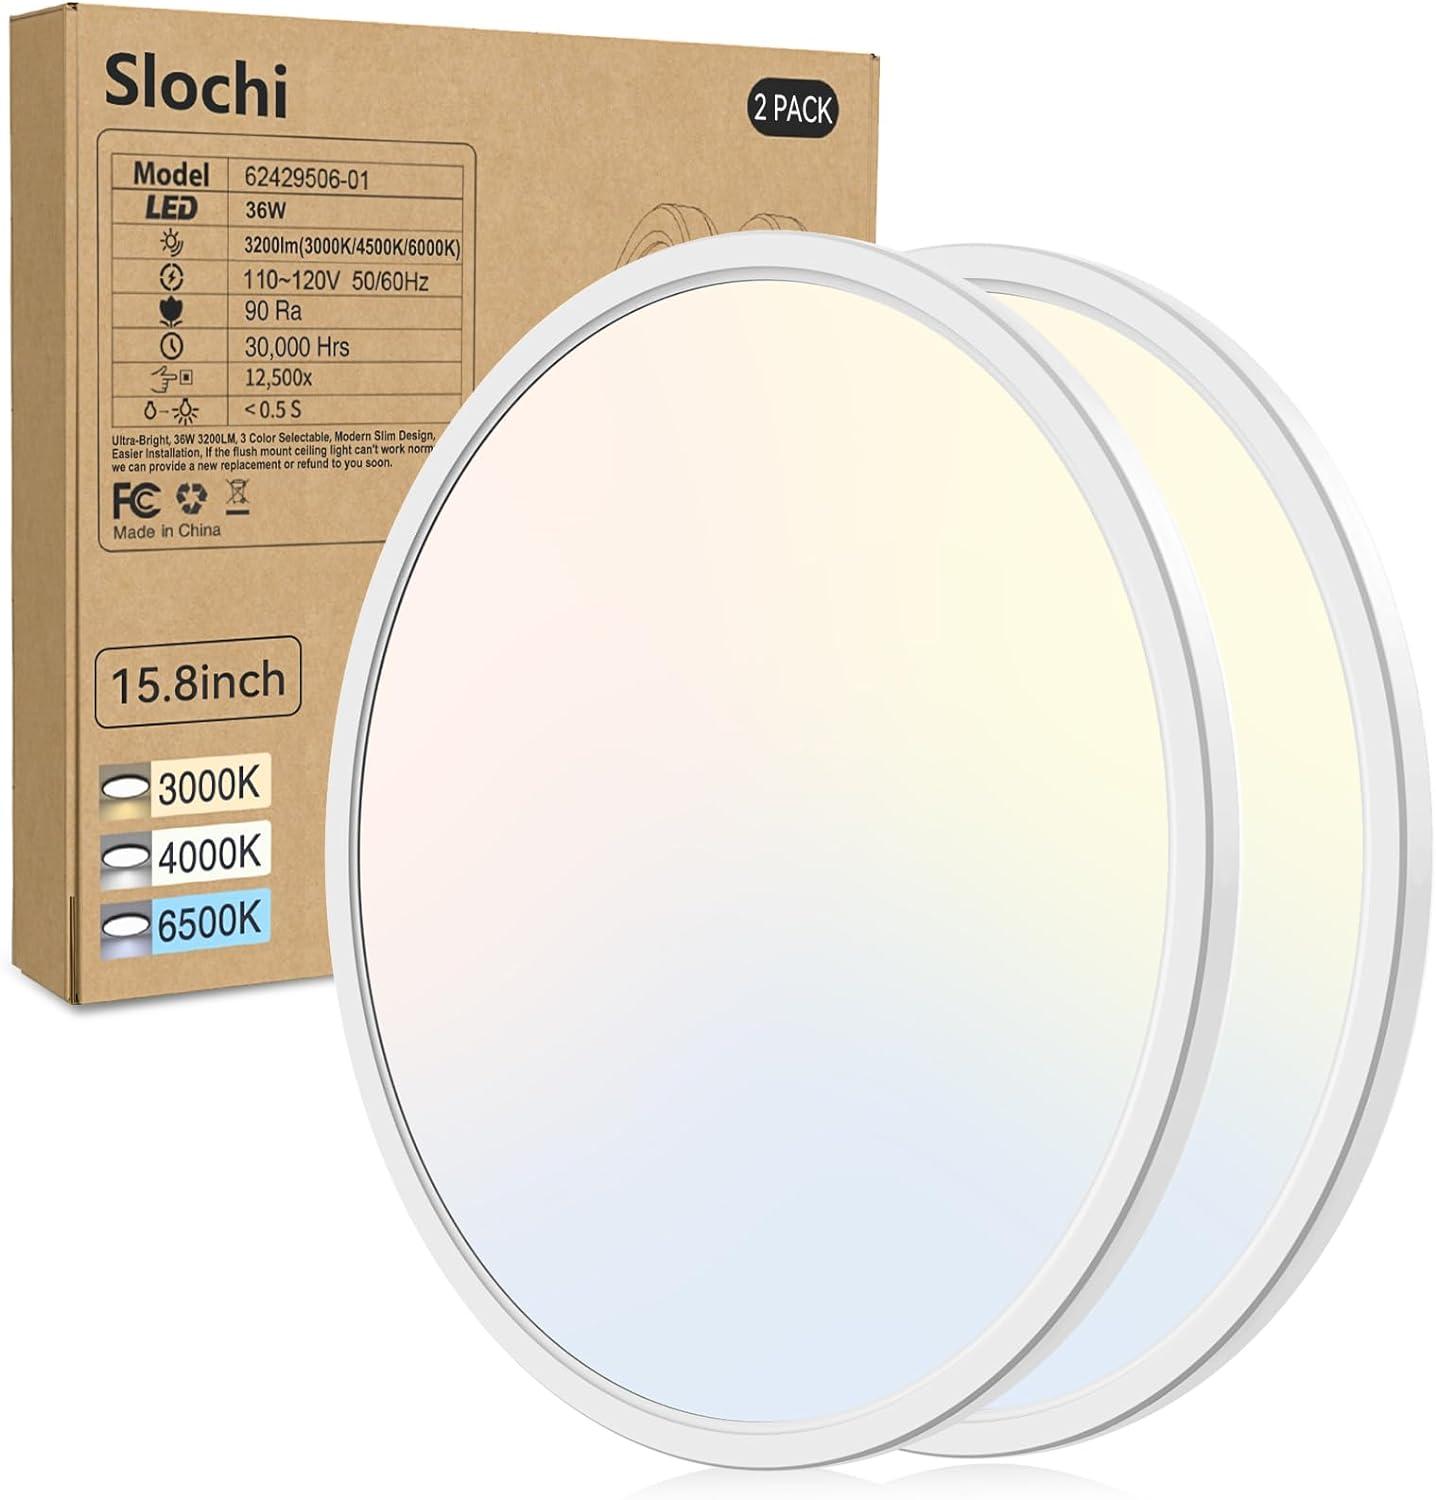 Slochi 15.8 Inch 2 Pack Flush Mount LED Ceiling Light, 36W, Retail $75.00